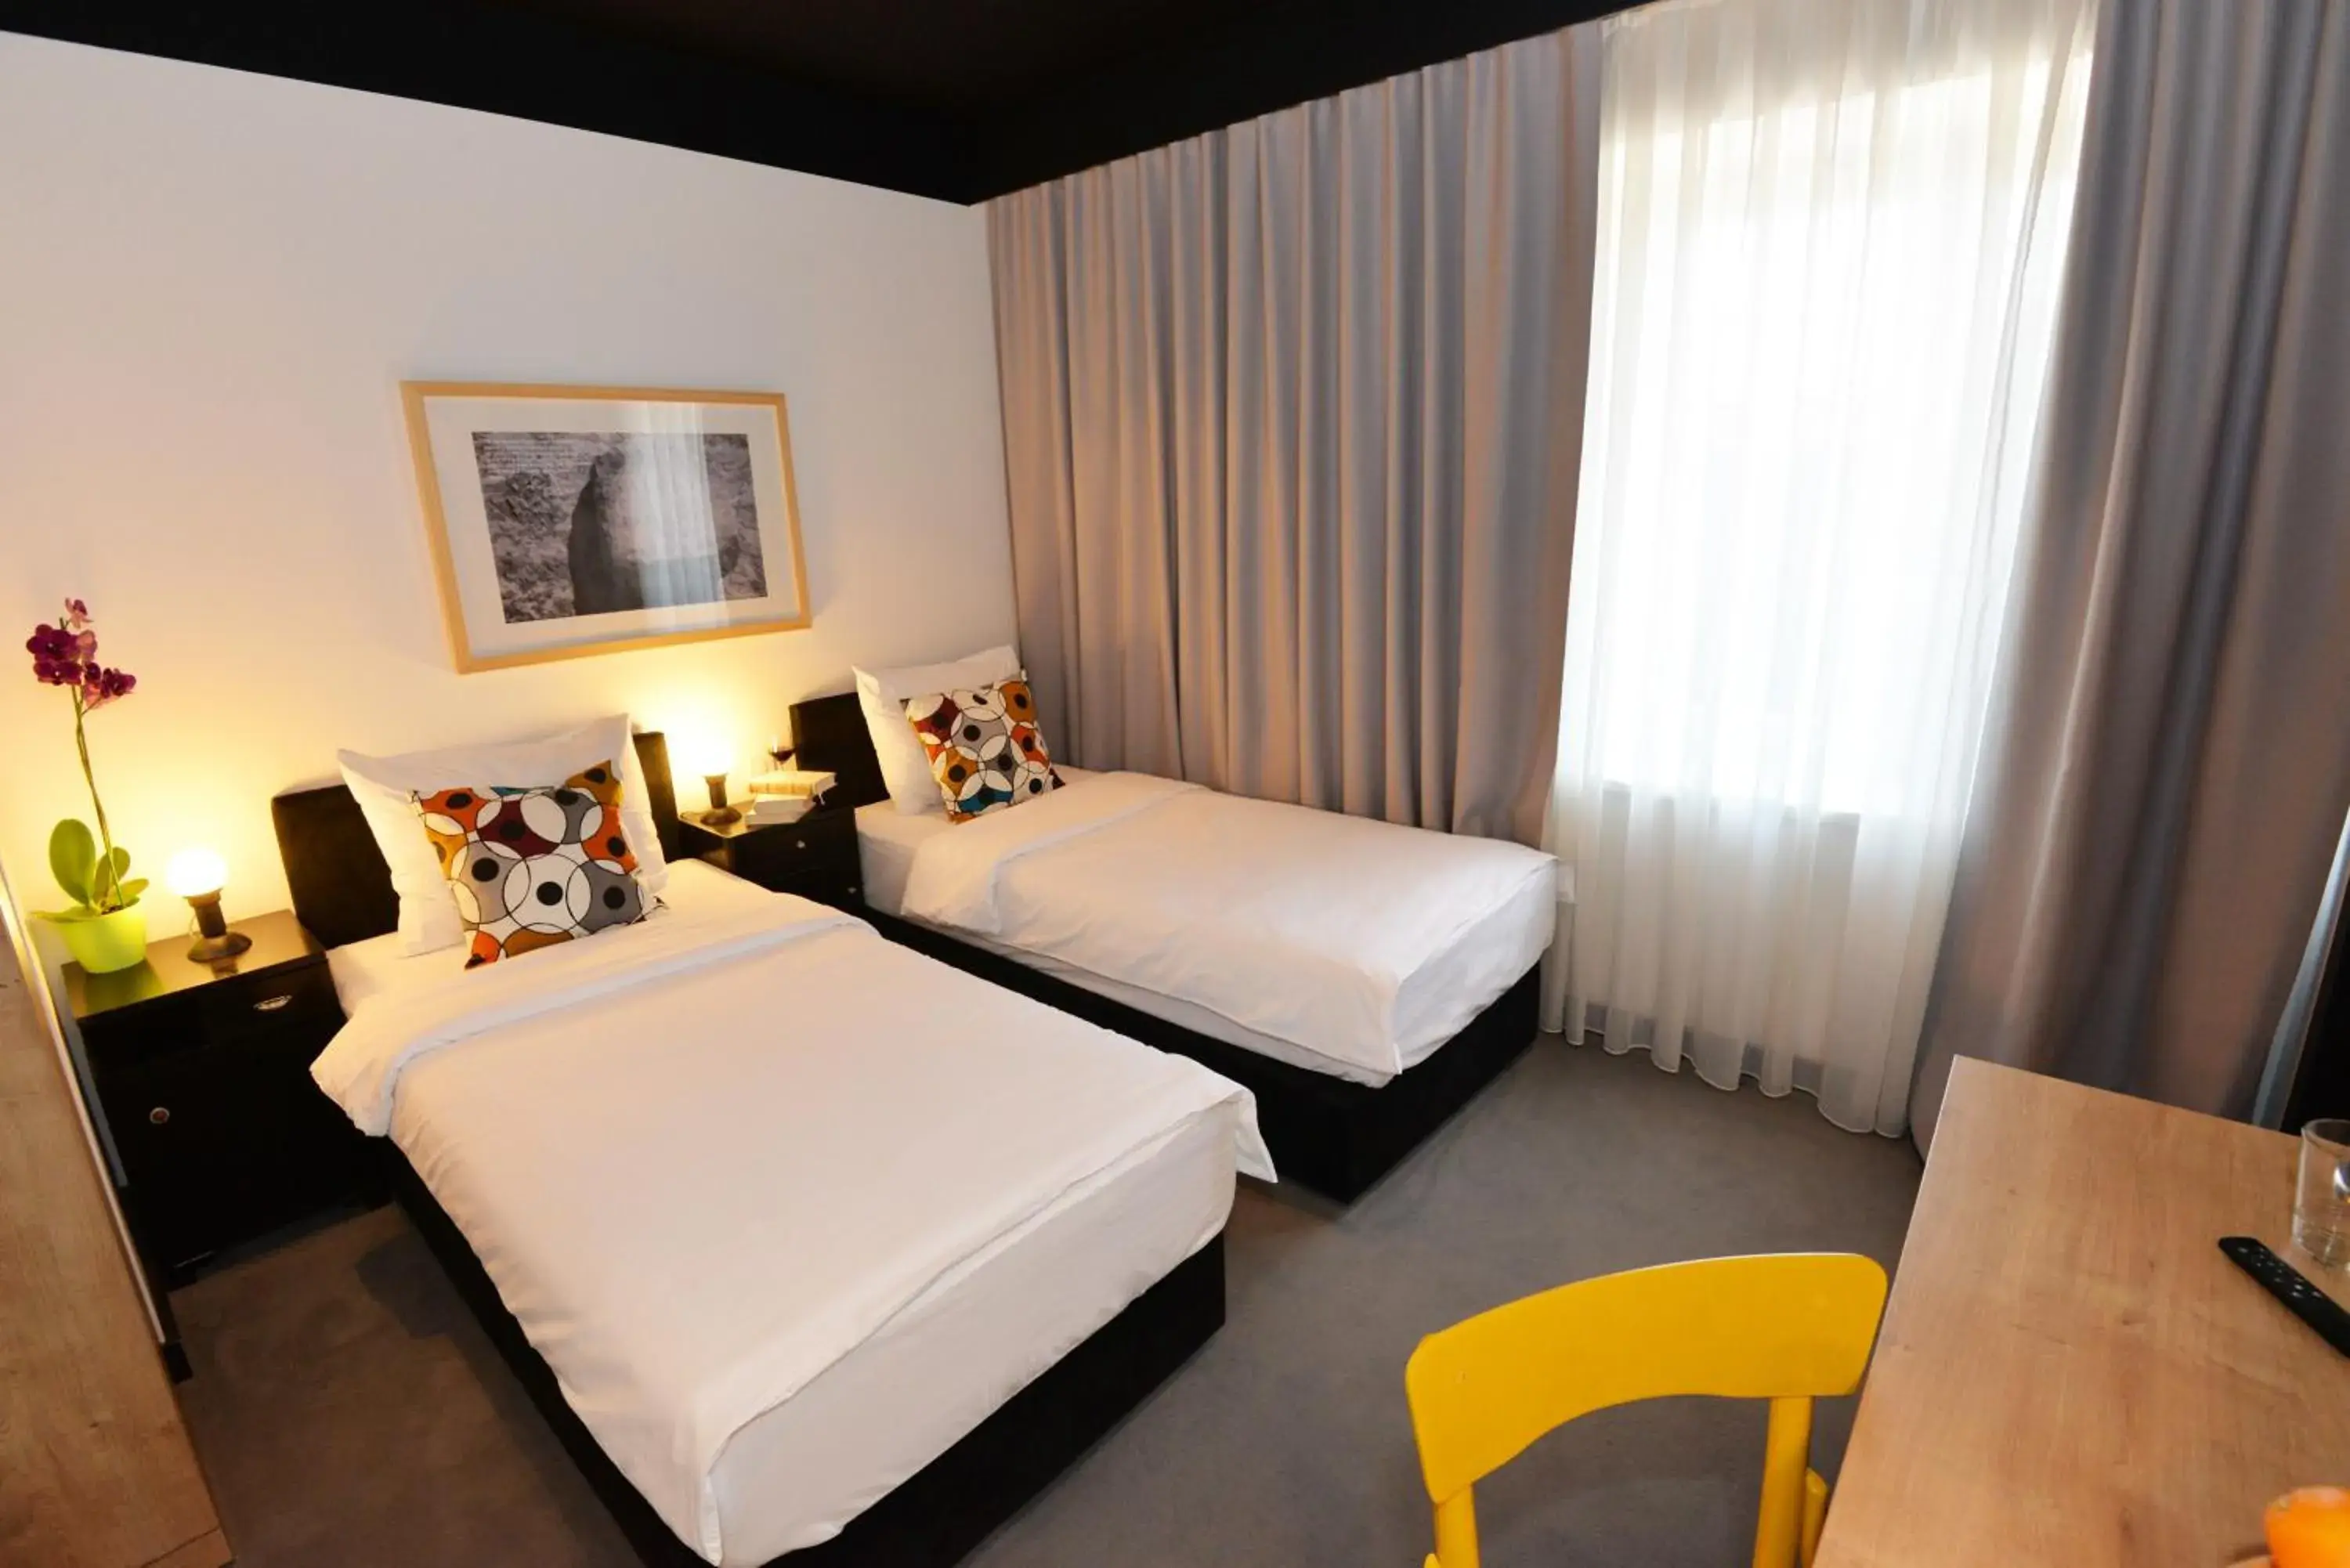 Bed, Room Photo in The Loop Hotel